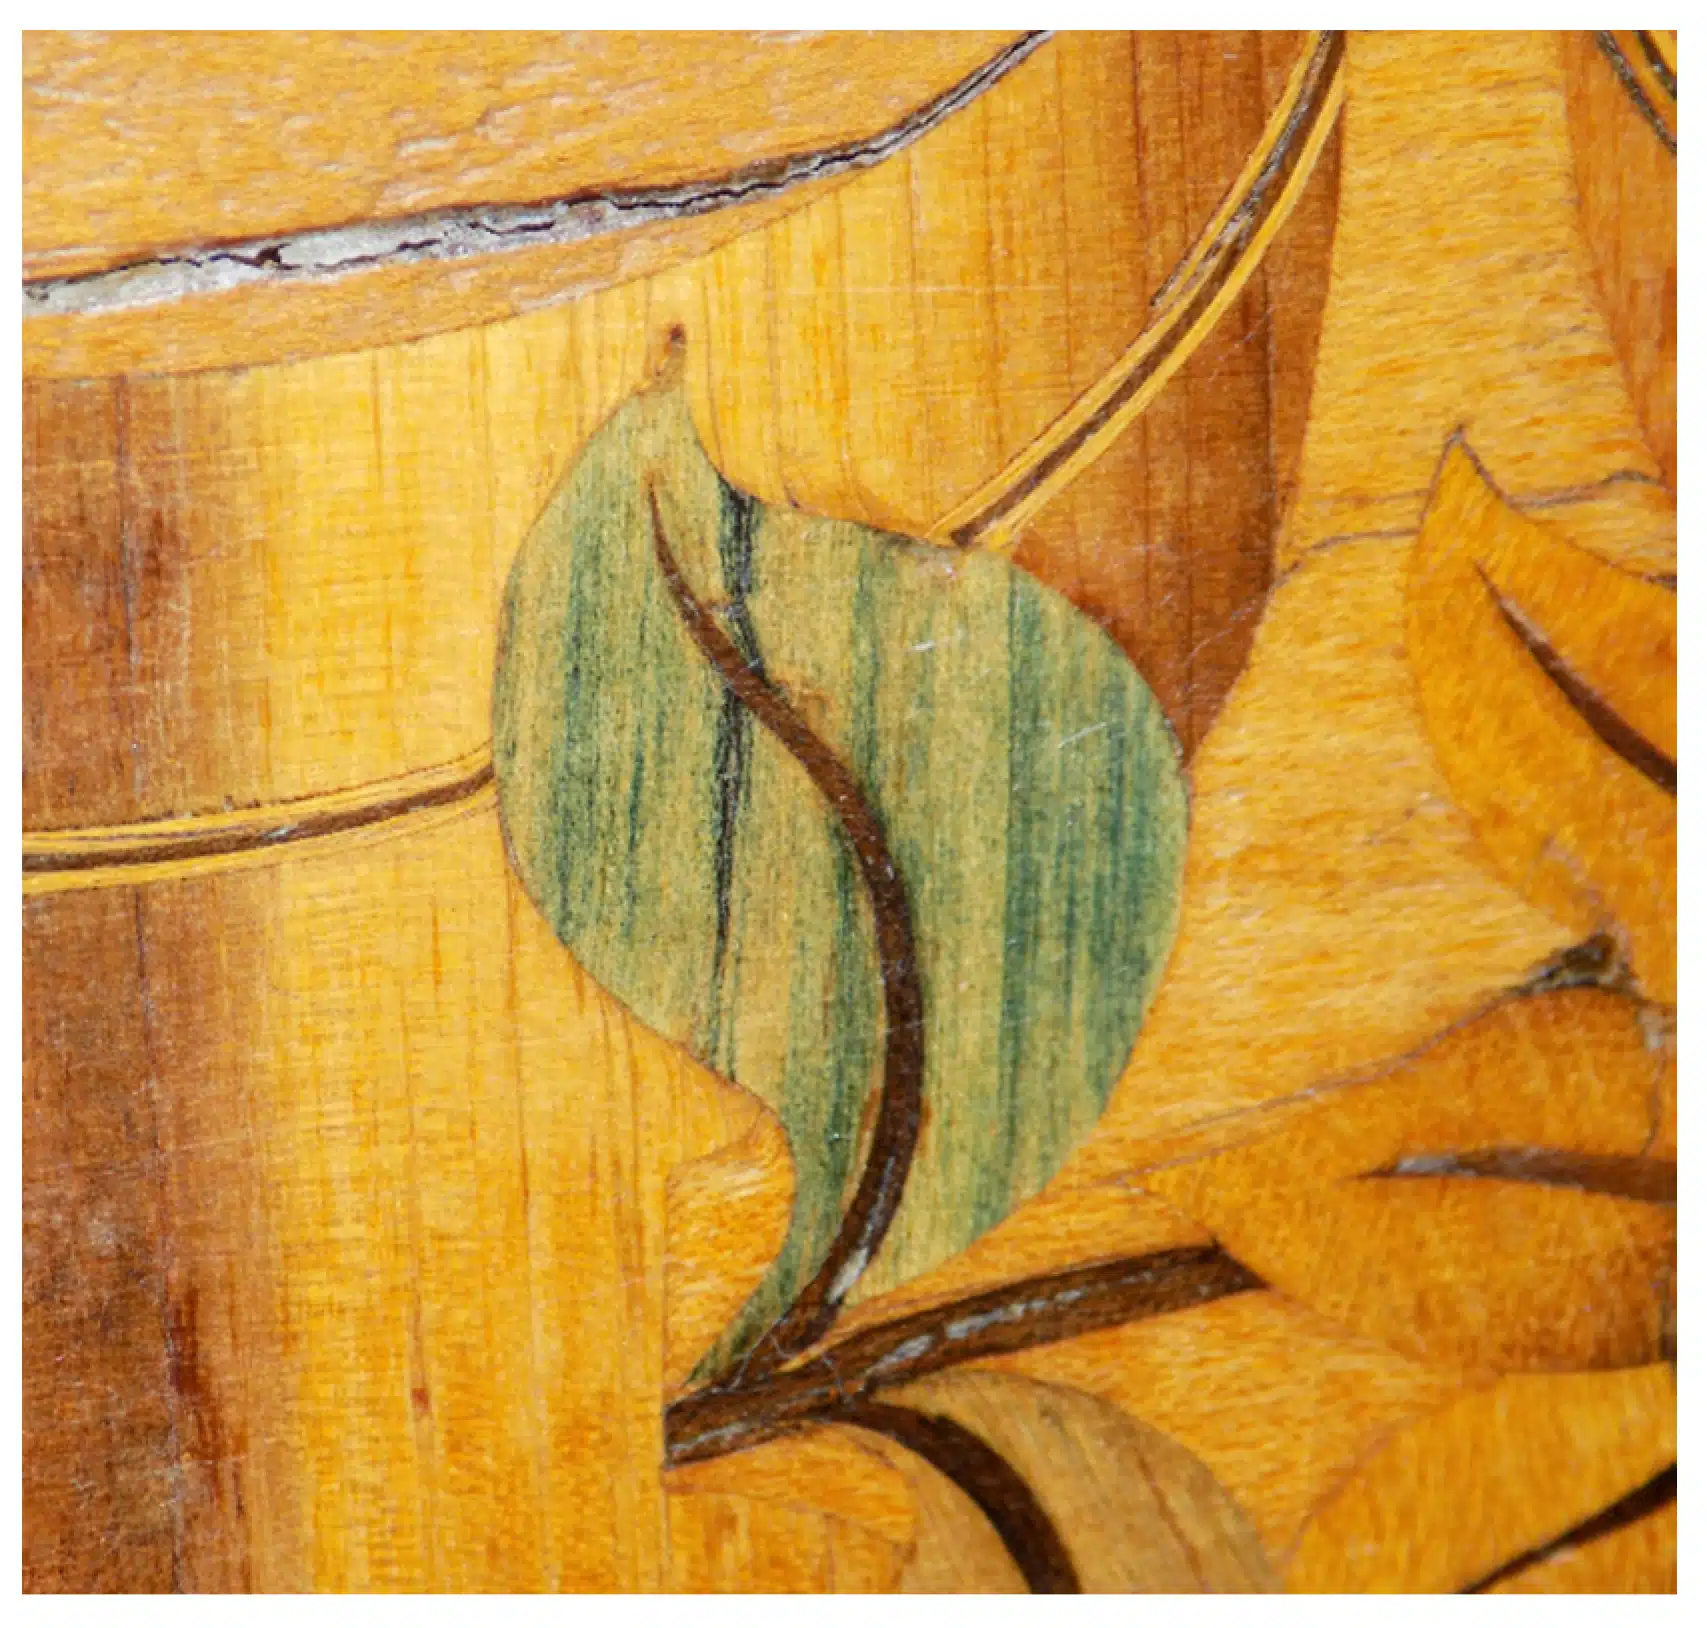 Chlorociboria wood working stain